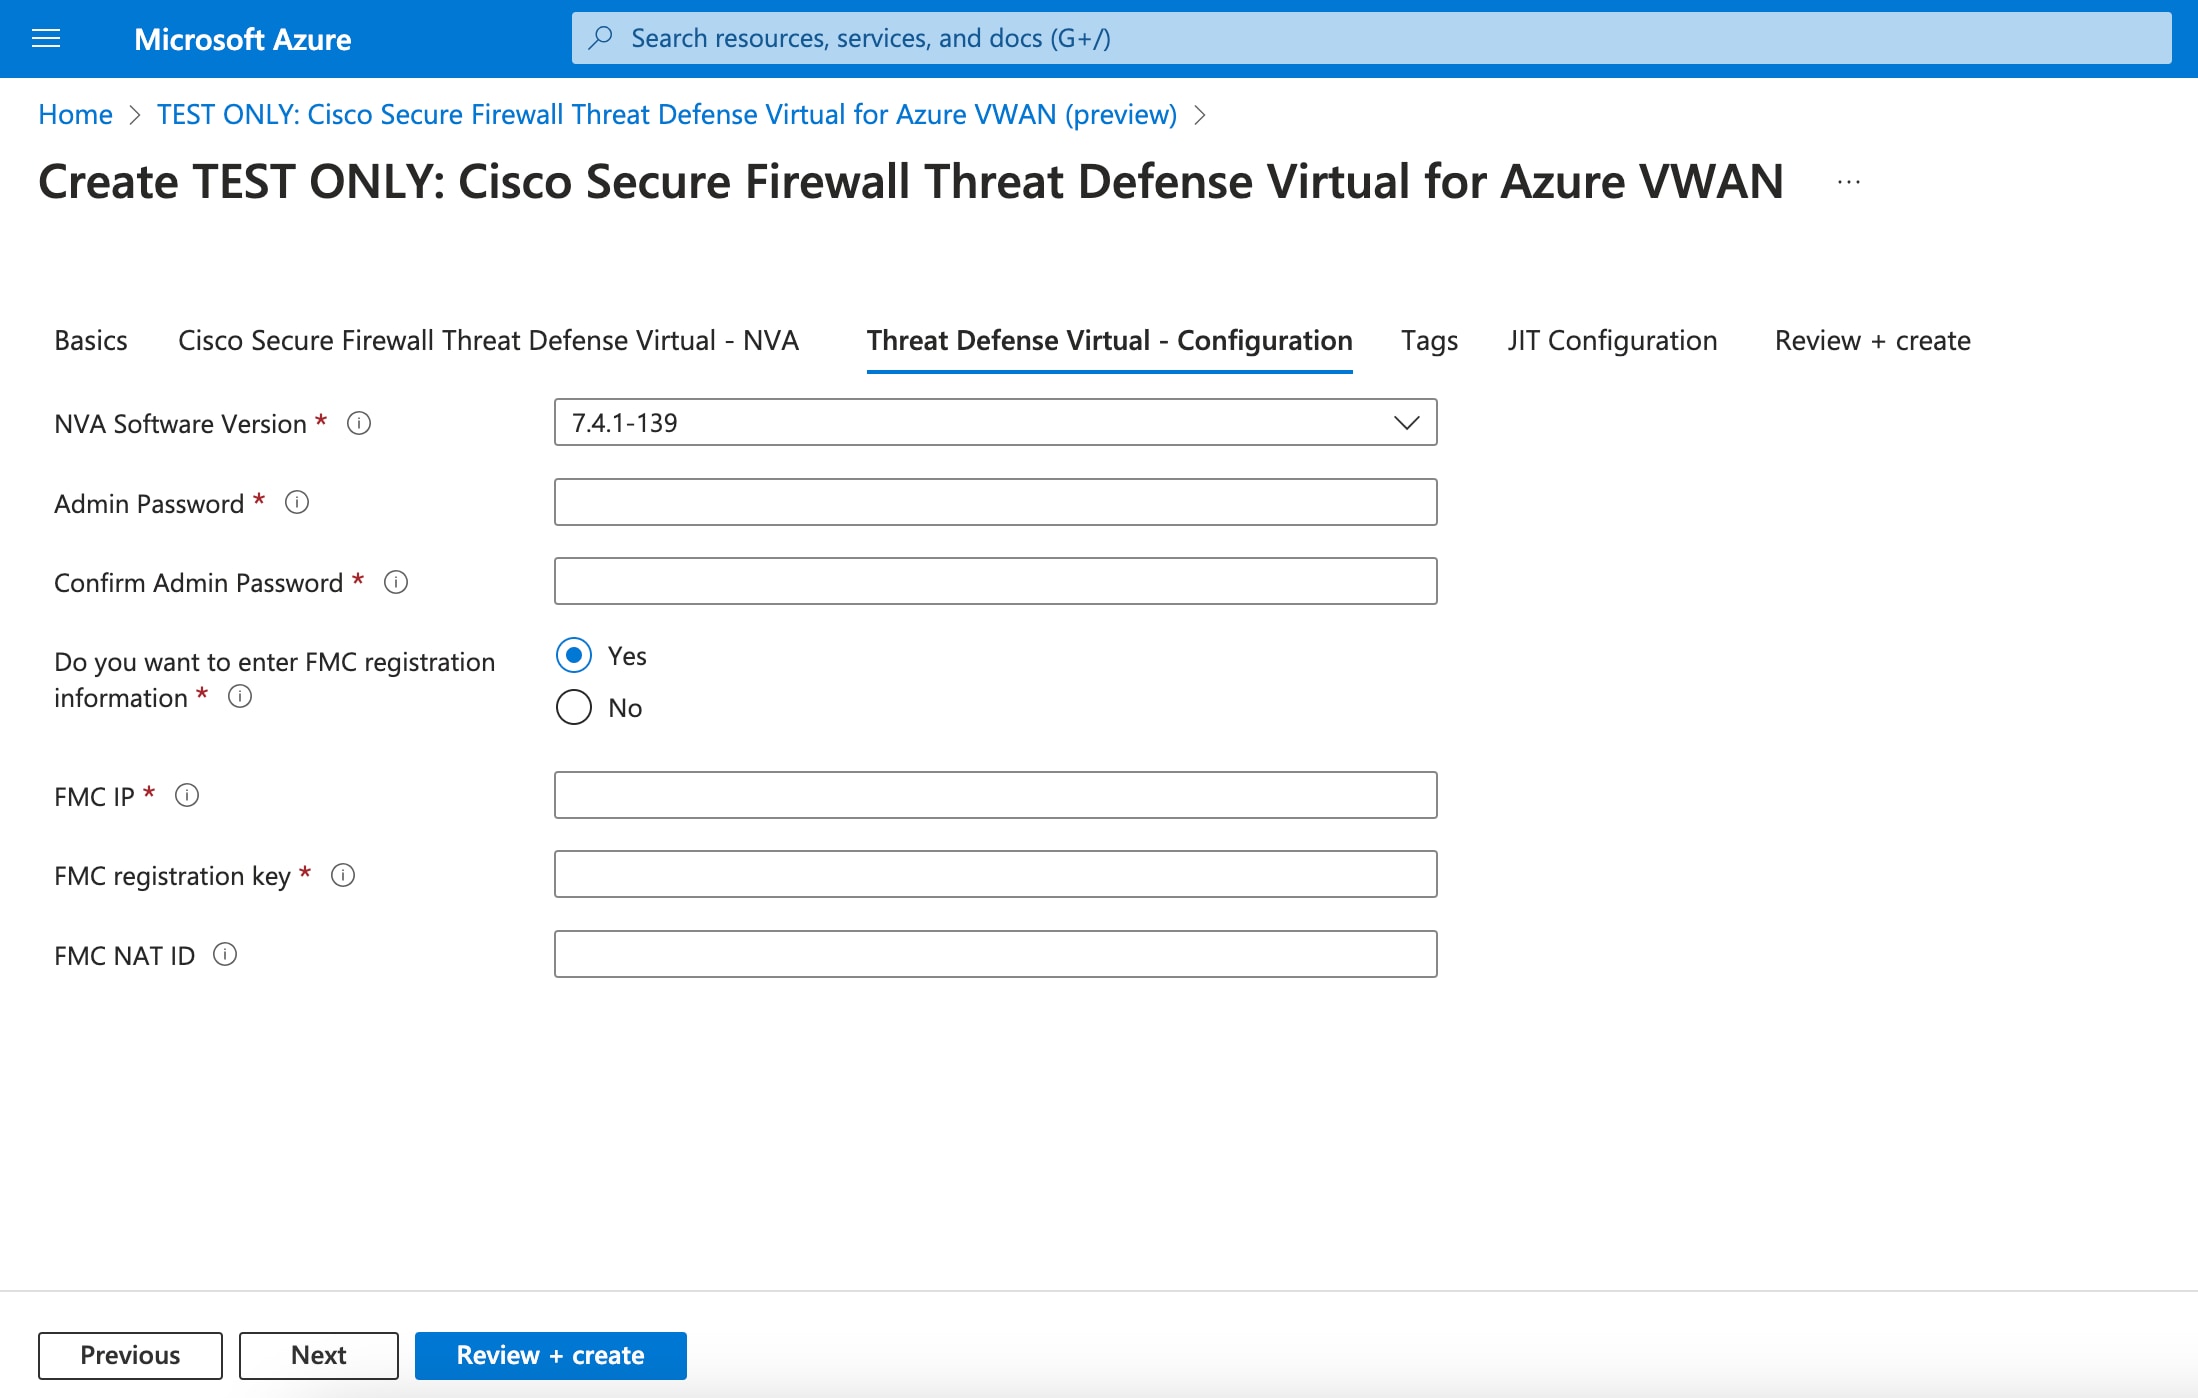 Threat Defense Virtual - Configuration